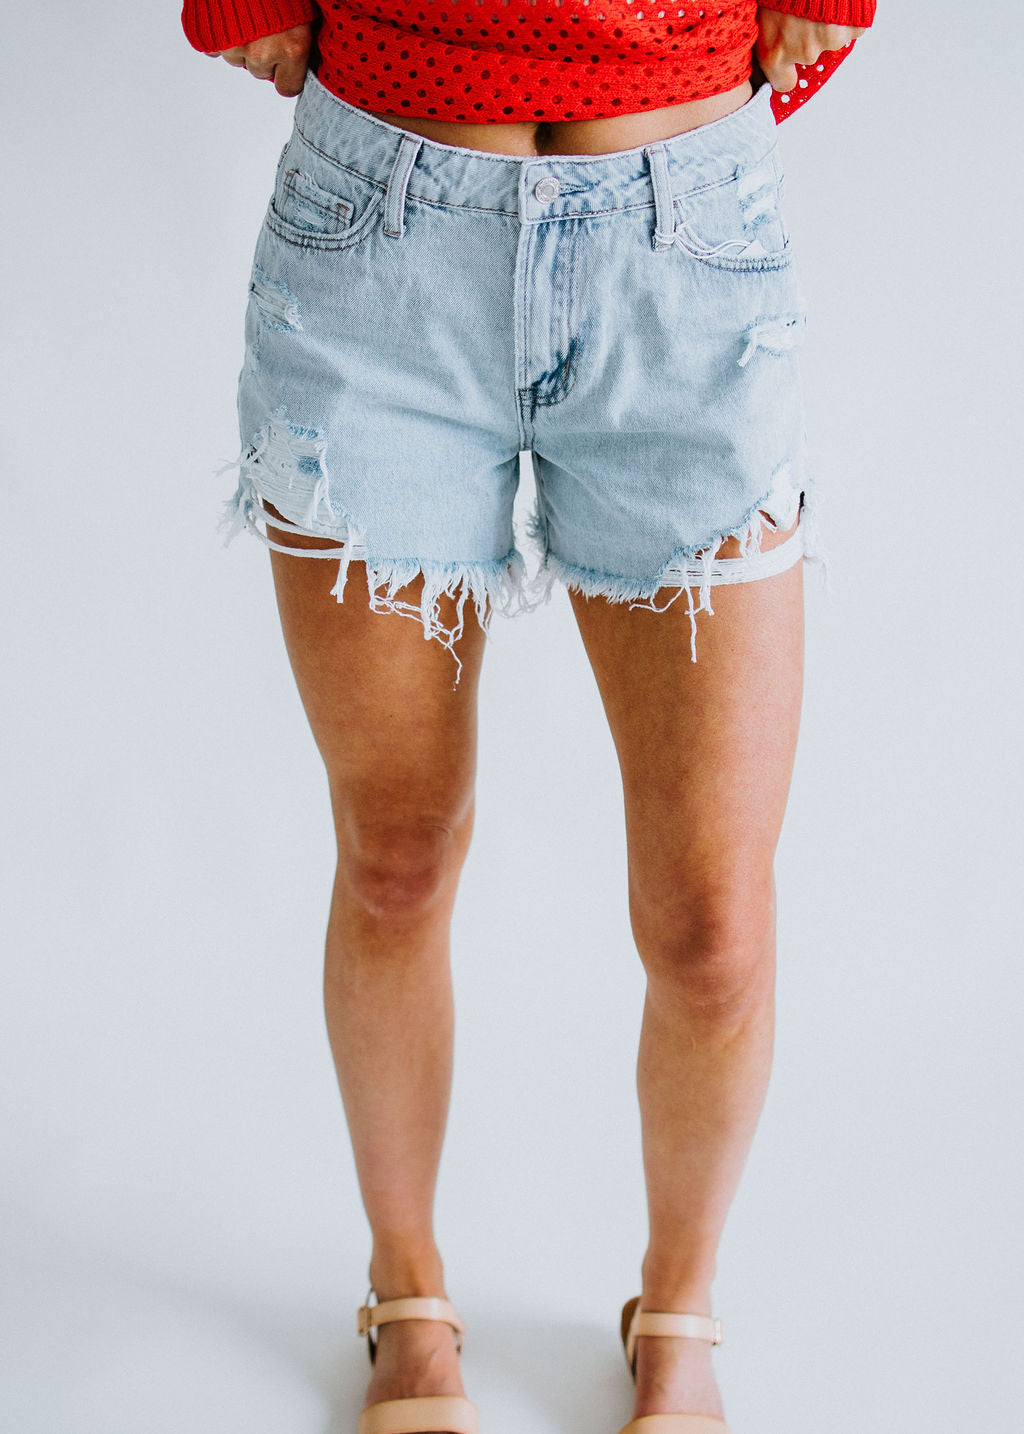 Tana Lace Distressed Shorts